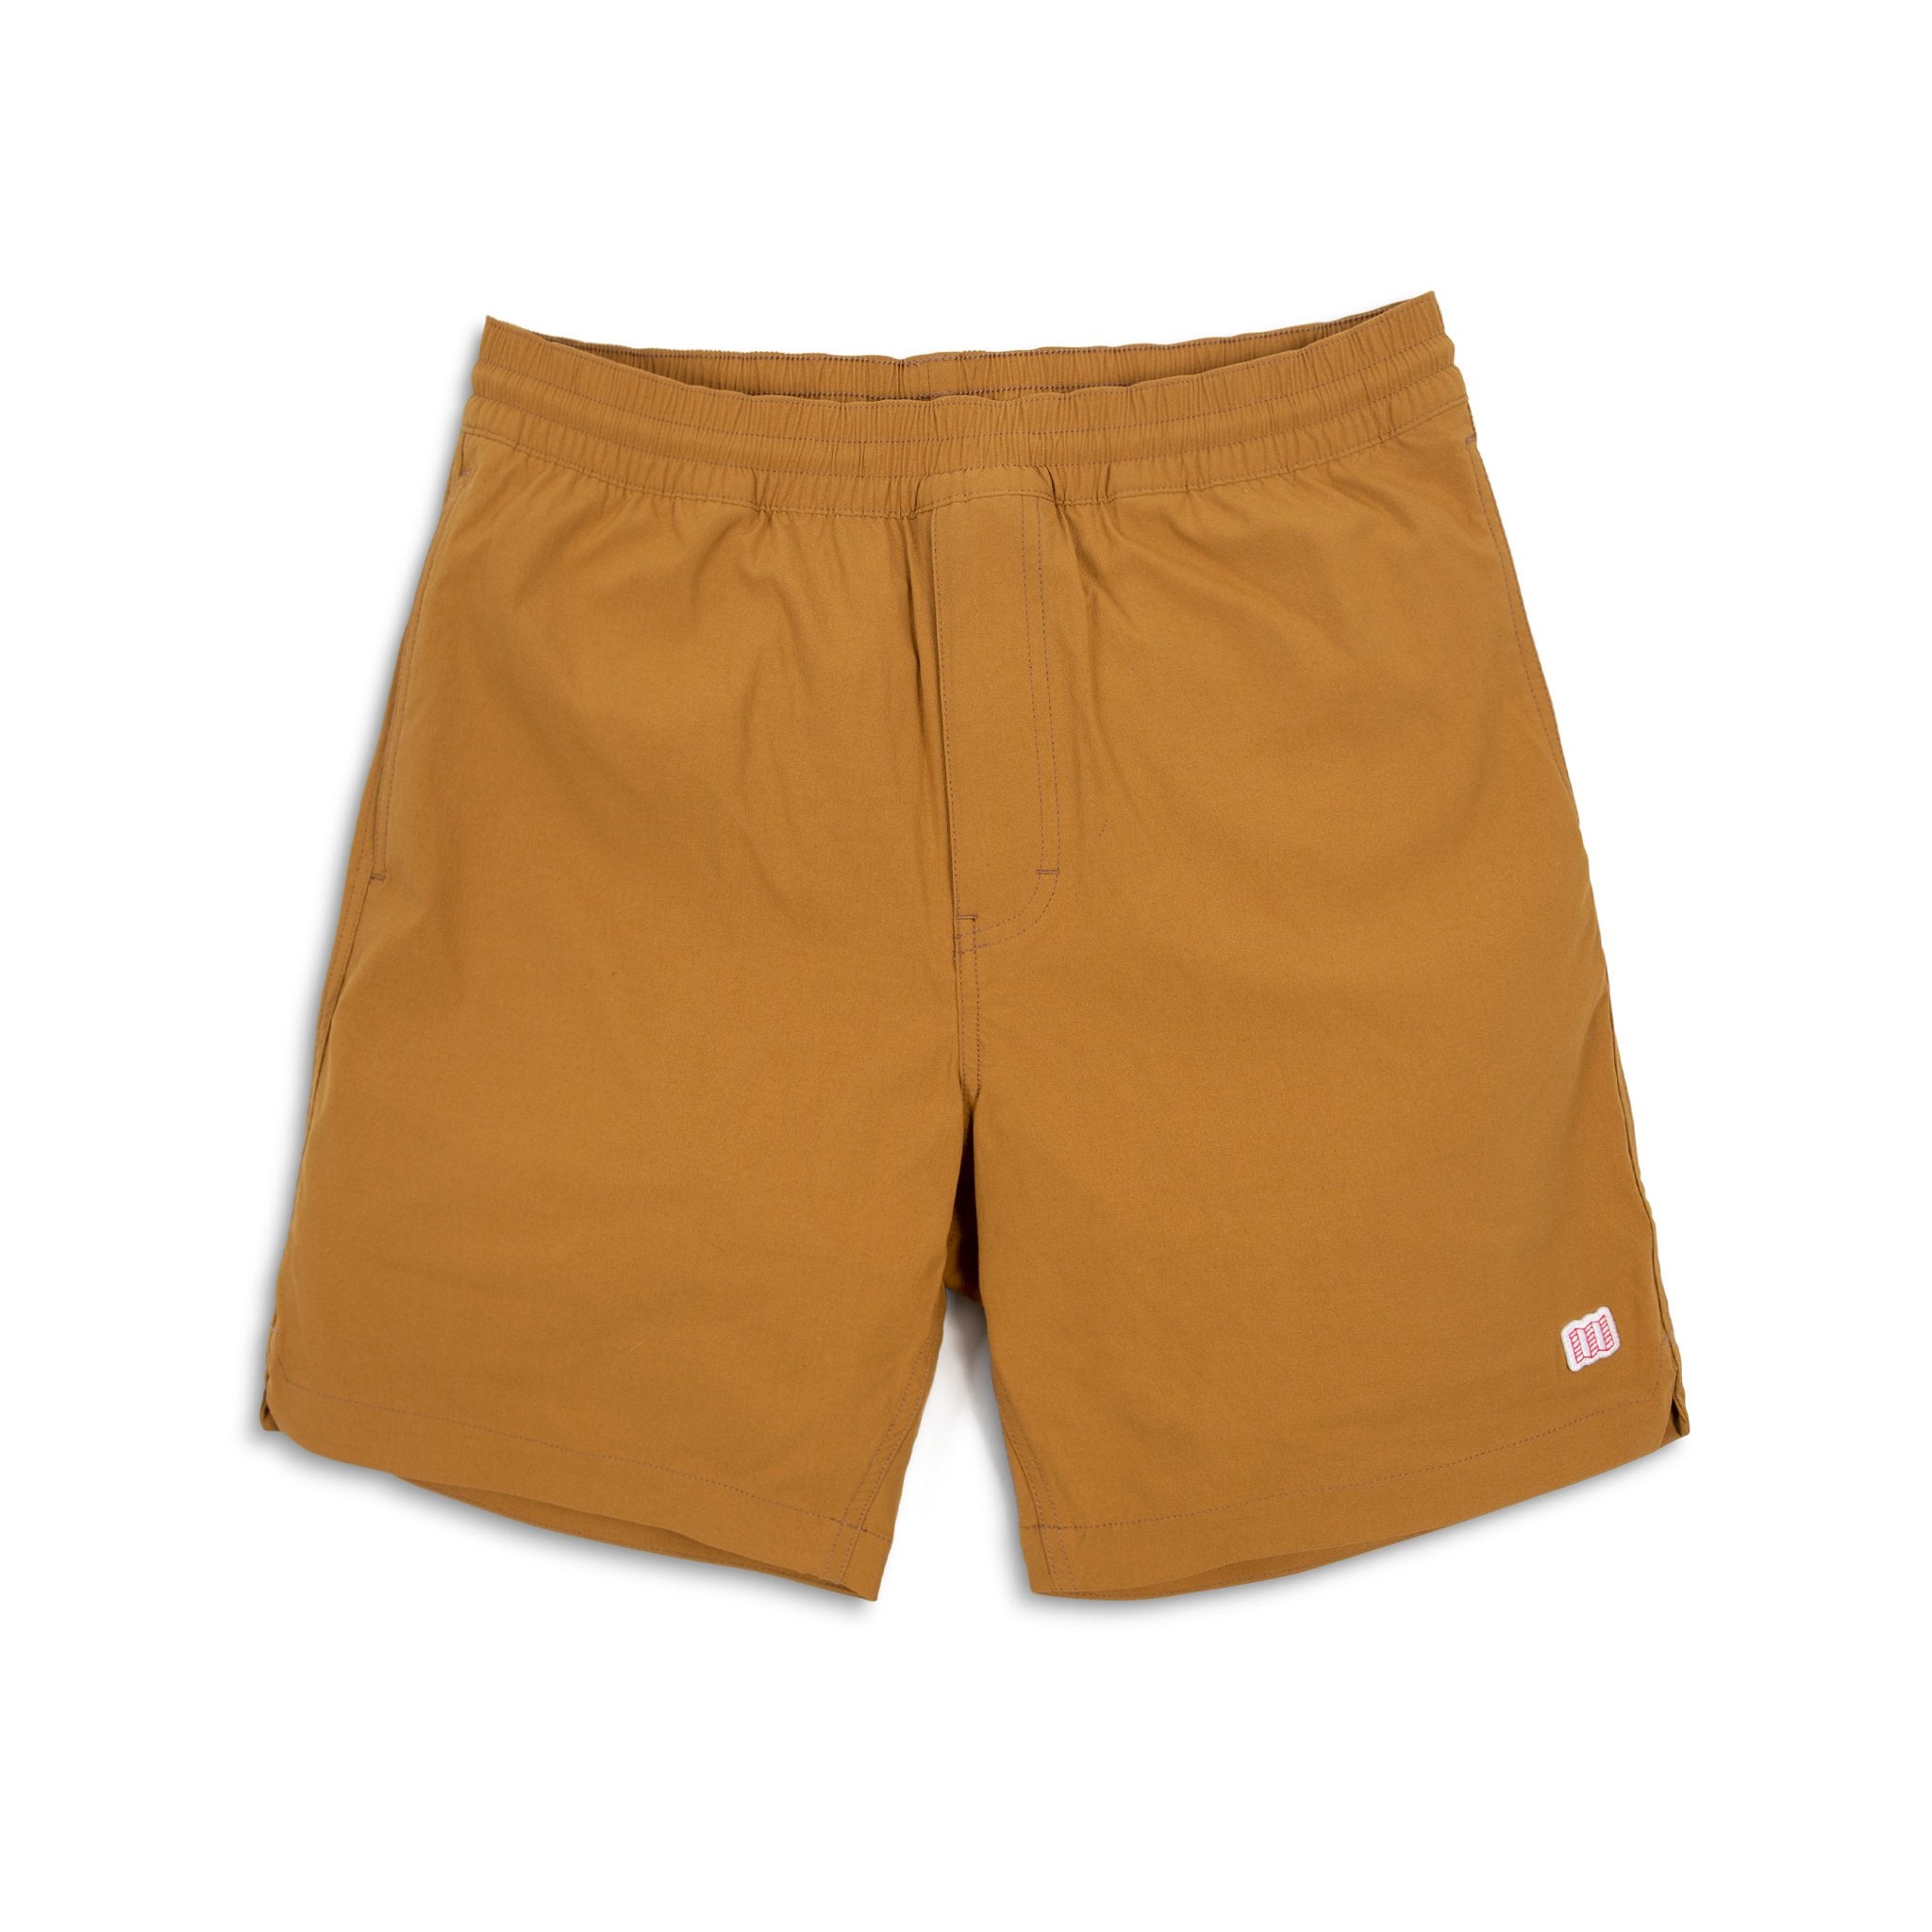 Topo Designs Men's Global lightweight quick dry travel Shorts in Dark Khaki brown.